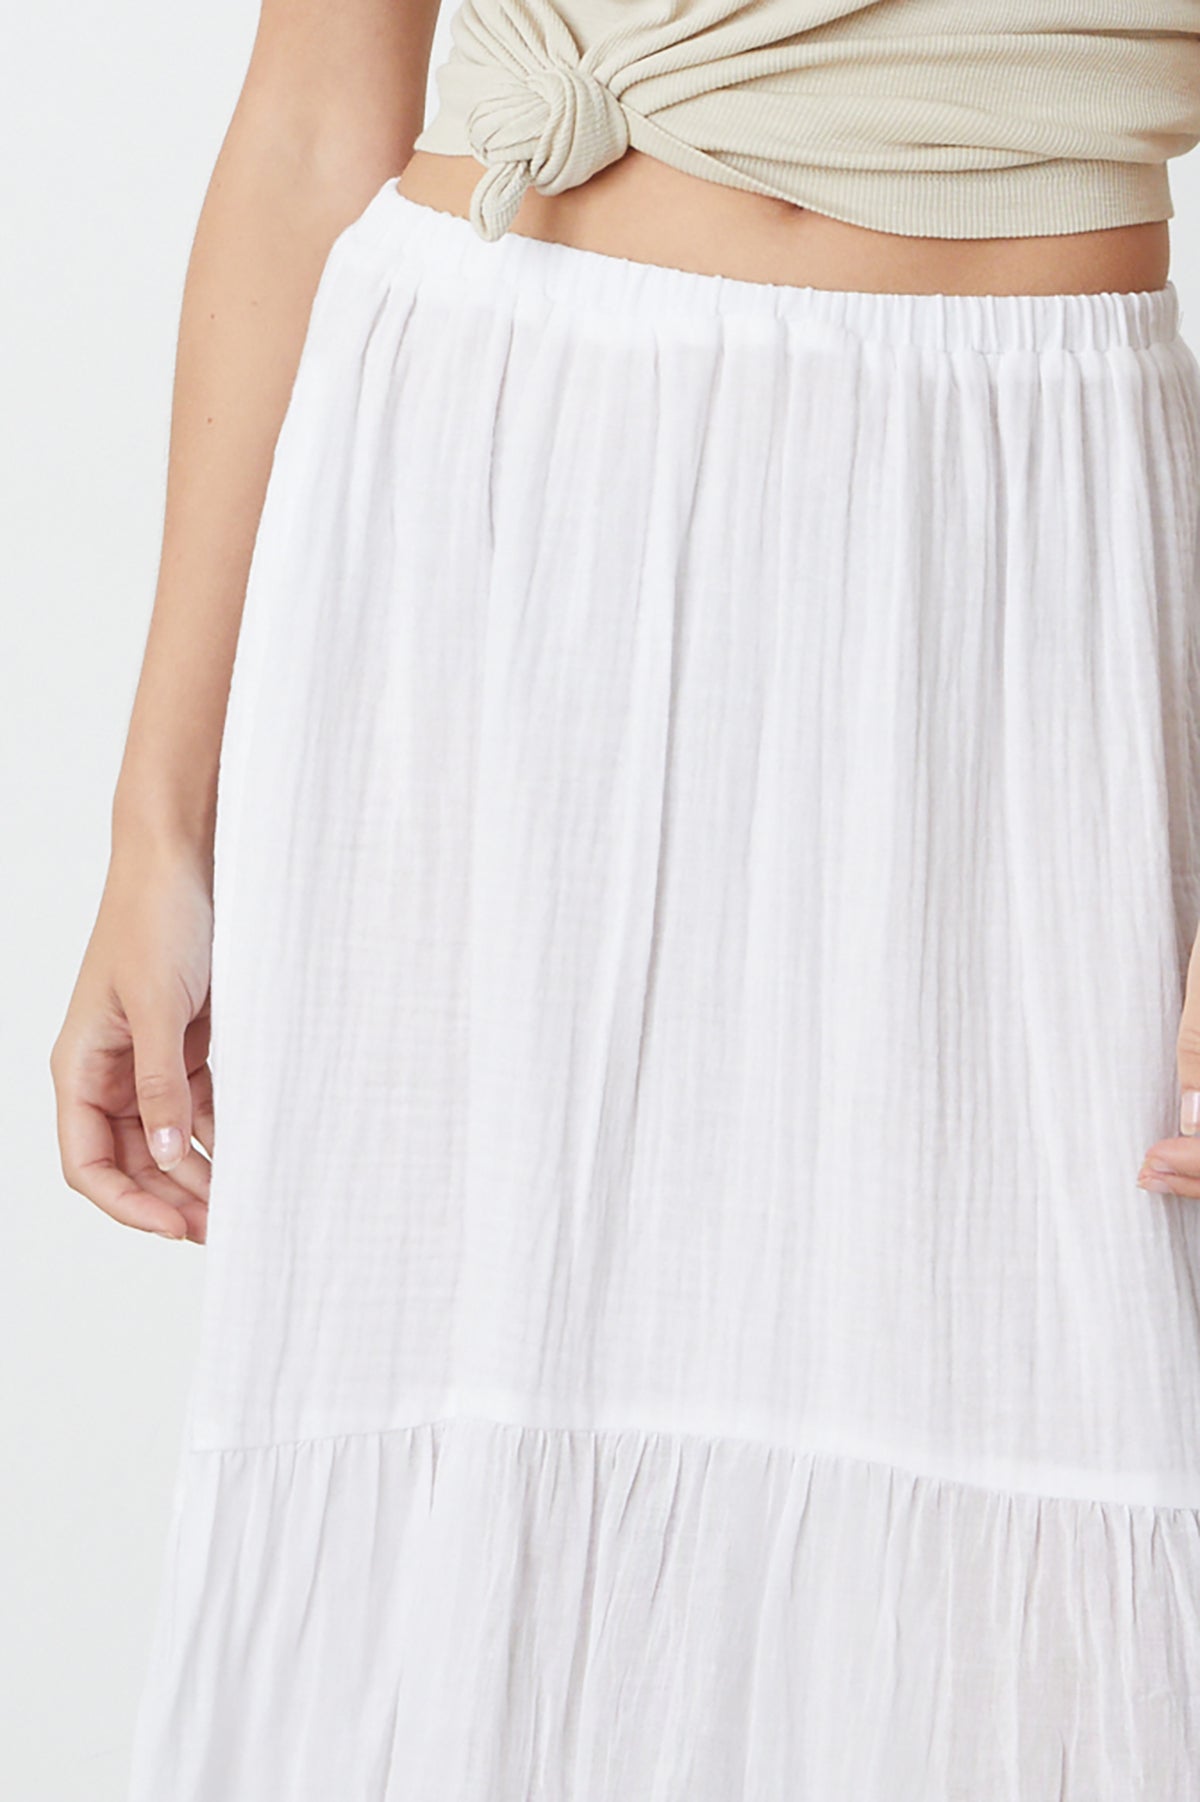 Mckenna Tiered Skirt in white close up front-26255713730753